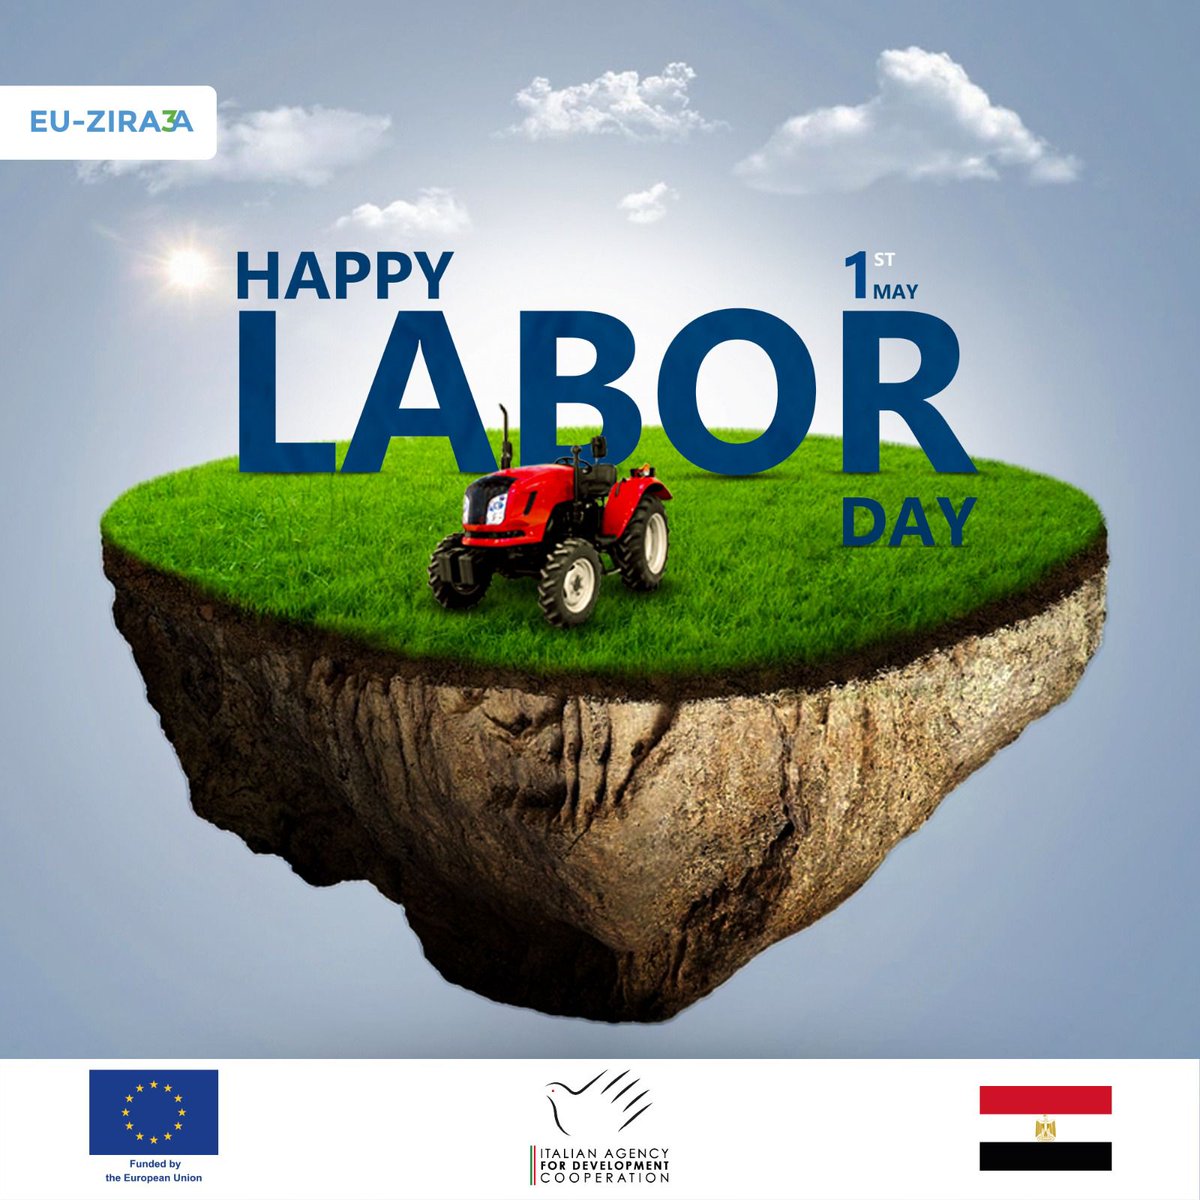 EU-ZIRA3A EU Integrated Rural Development Programme for Egypt, Wishes you Happy Labor Day.
برنامج الاتحاد الأوروبي للتنمية الريفية المتكاملة لمصر EU-ZIRA3A  يهنئكم بعيد العمال
#EUinEgypt
#MinistryOfAgriculture
#وزارة_الموارد_المائية_والرى
#وزارة_التنمية_المحلية